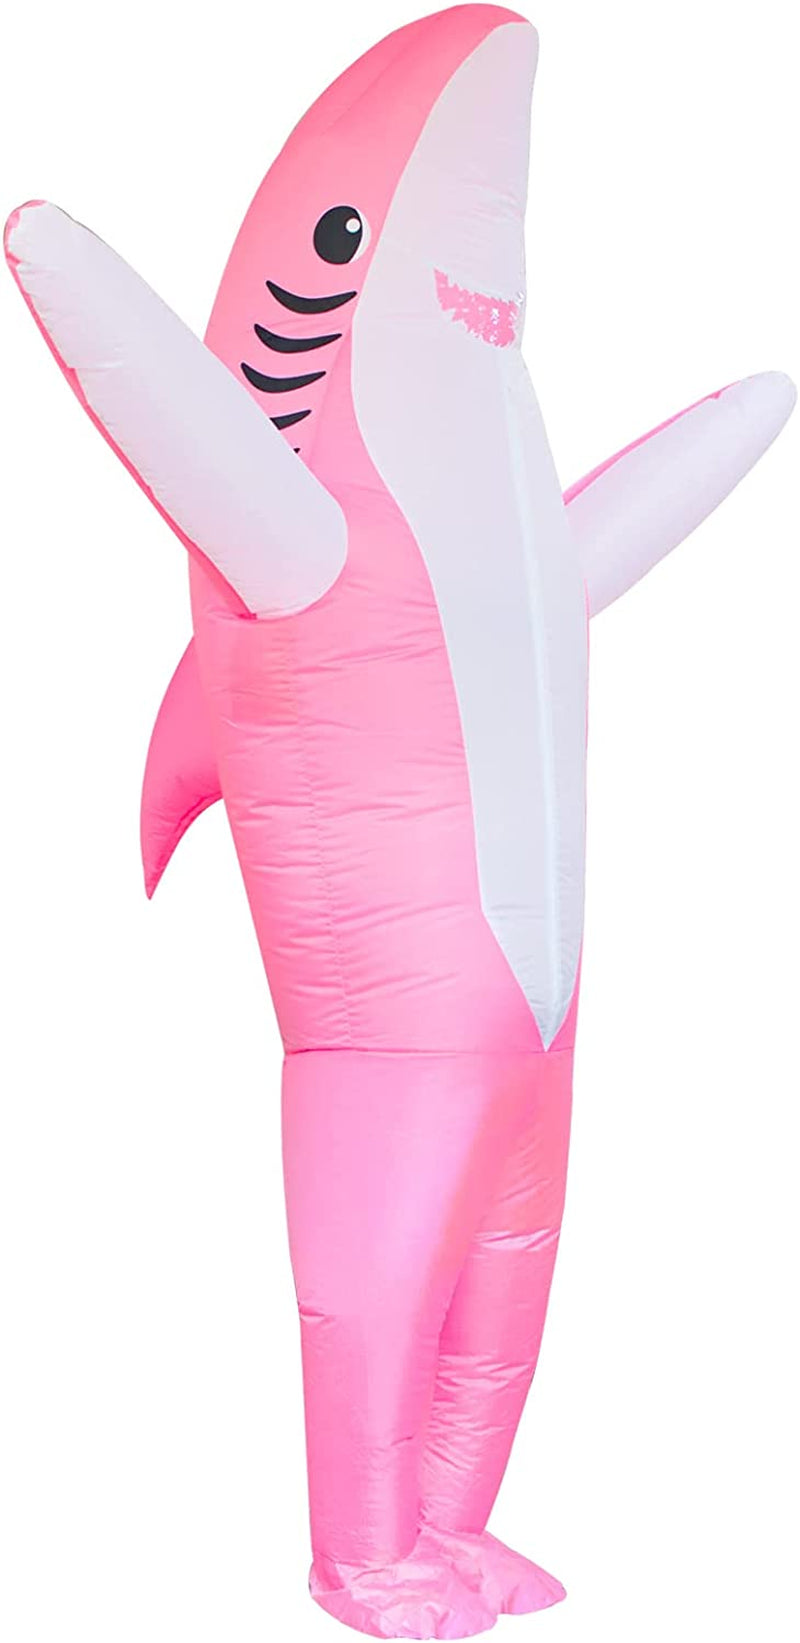 Stegosaurus Inflatable Shark Costume for Adult Funny Inflatable Halloween Costumes Cosplay Fantasy Costume  Stegosaurus Pink  